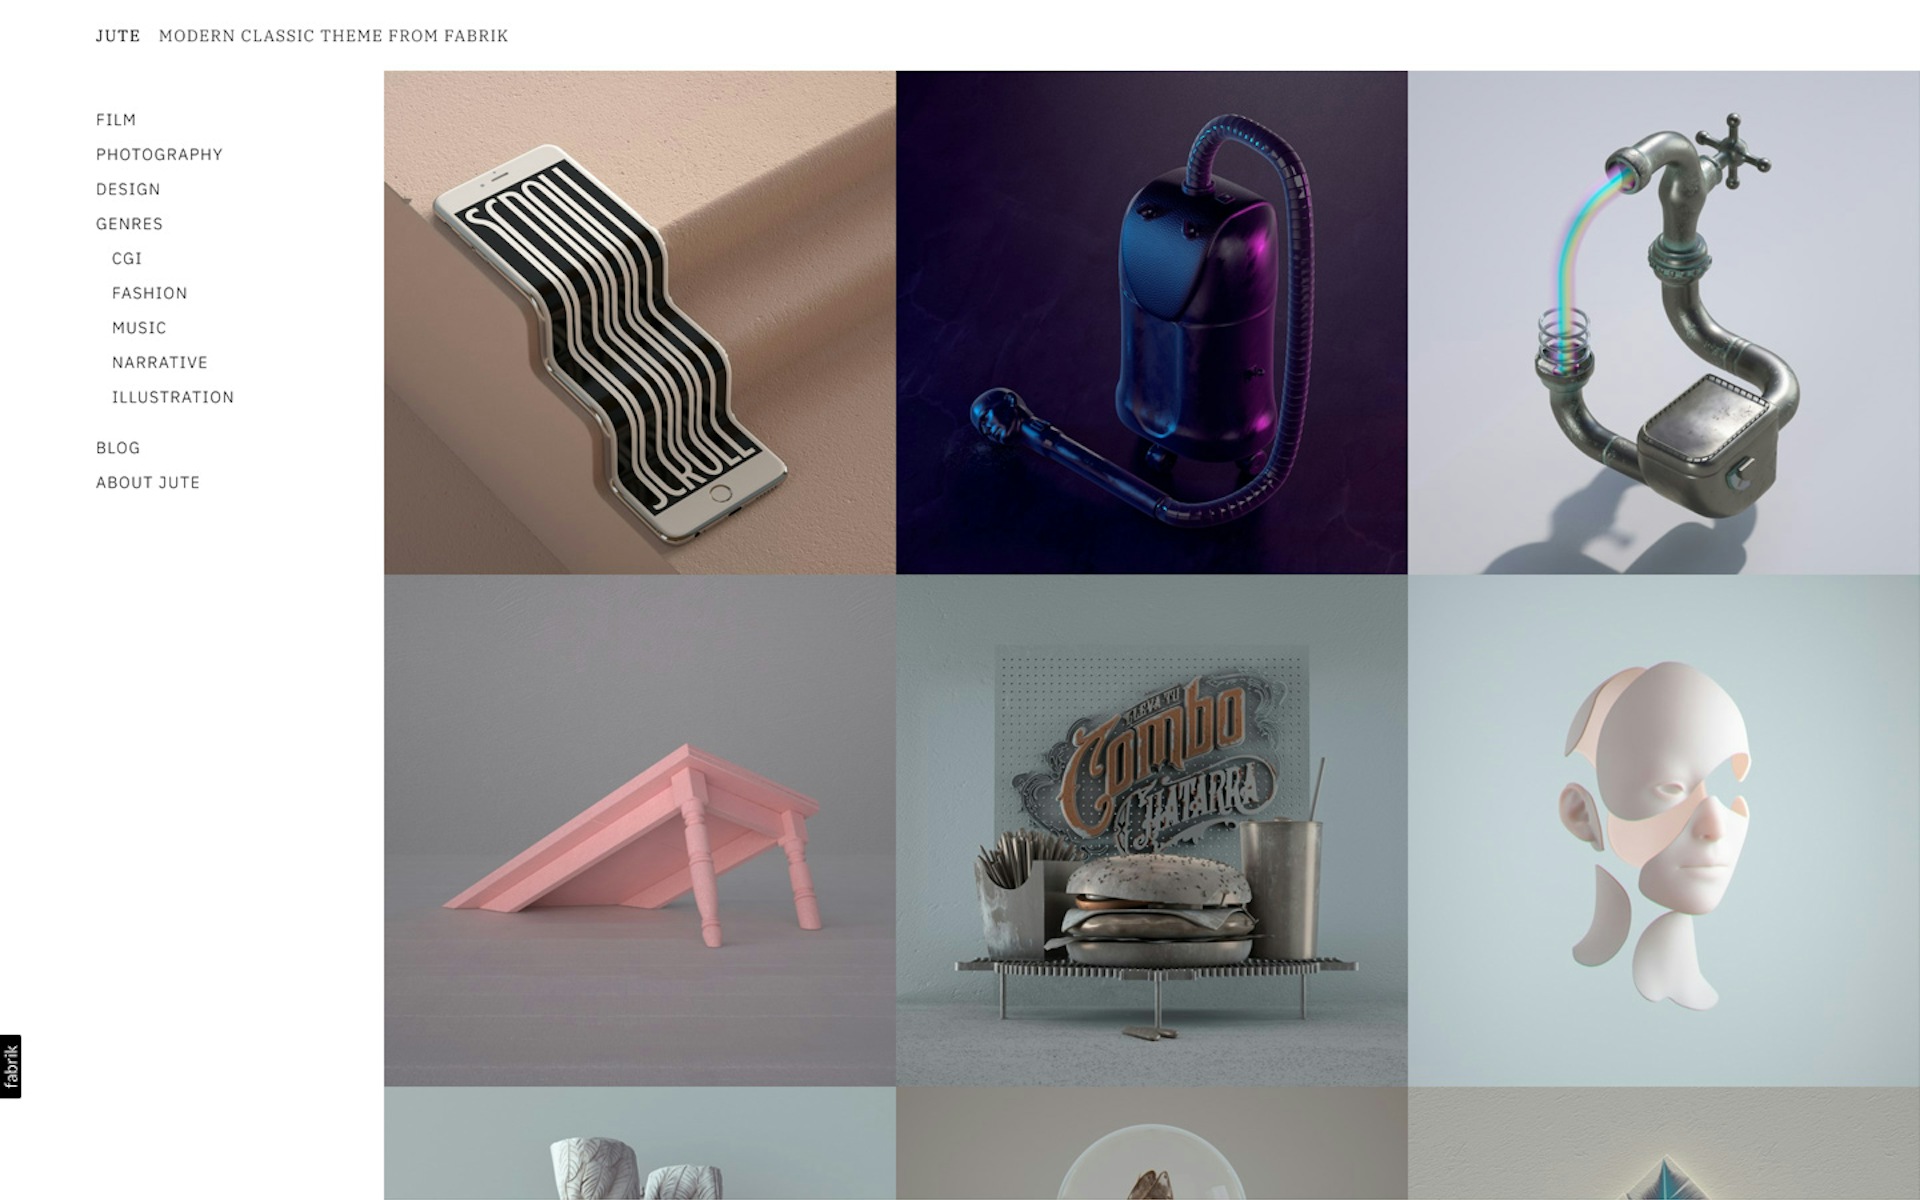 Jute theme for Fabrik portfolio website